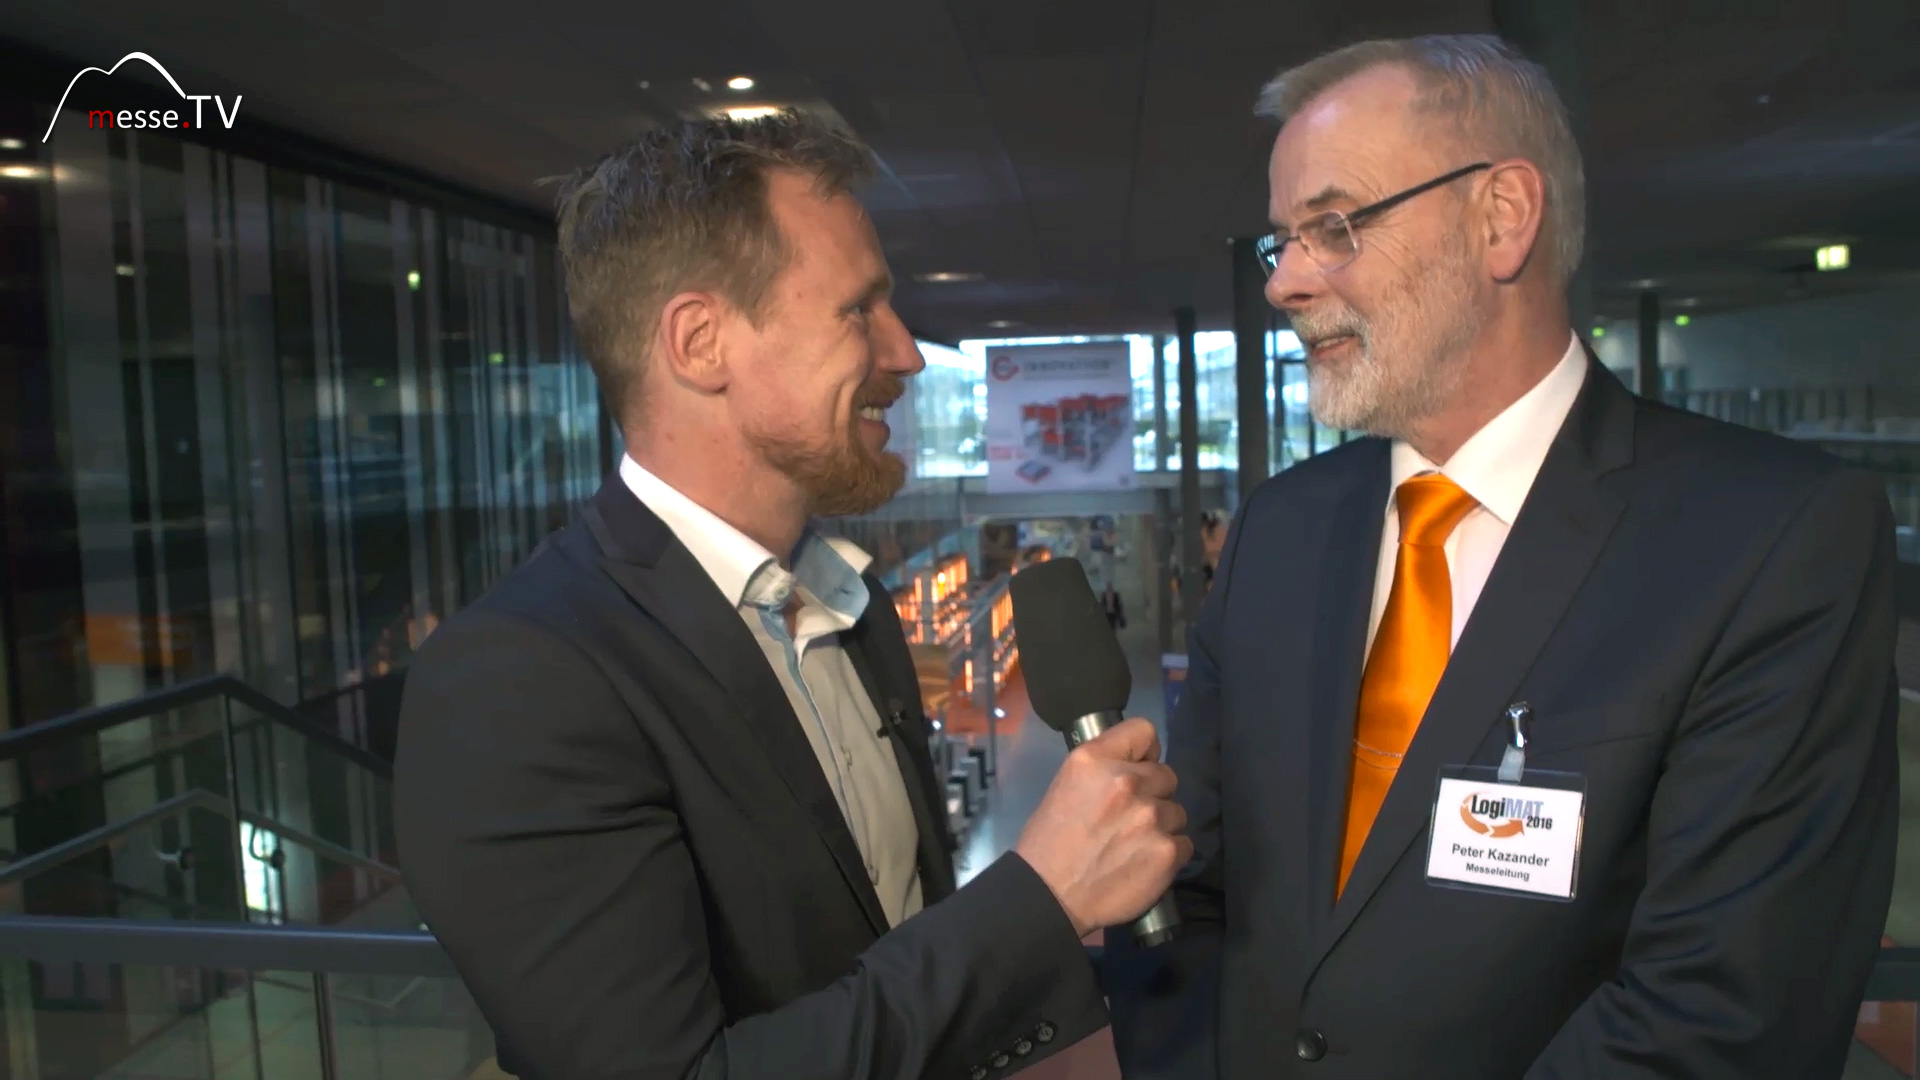 MesseTV Moderator Klas Boemecke with Fair Manager Peter Kazander